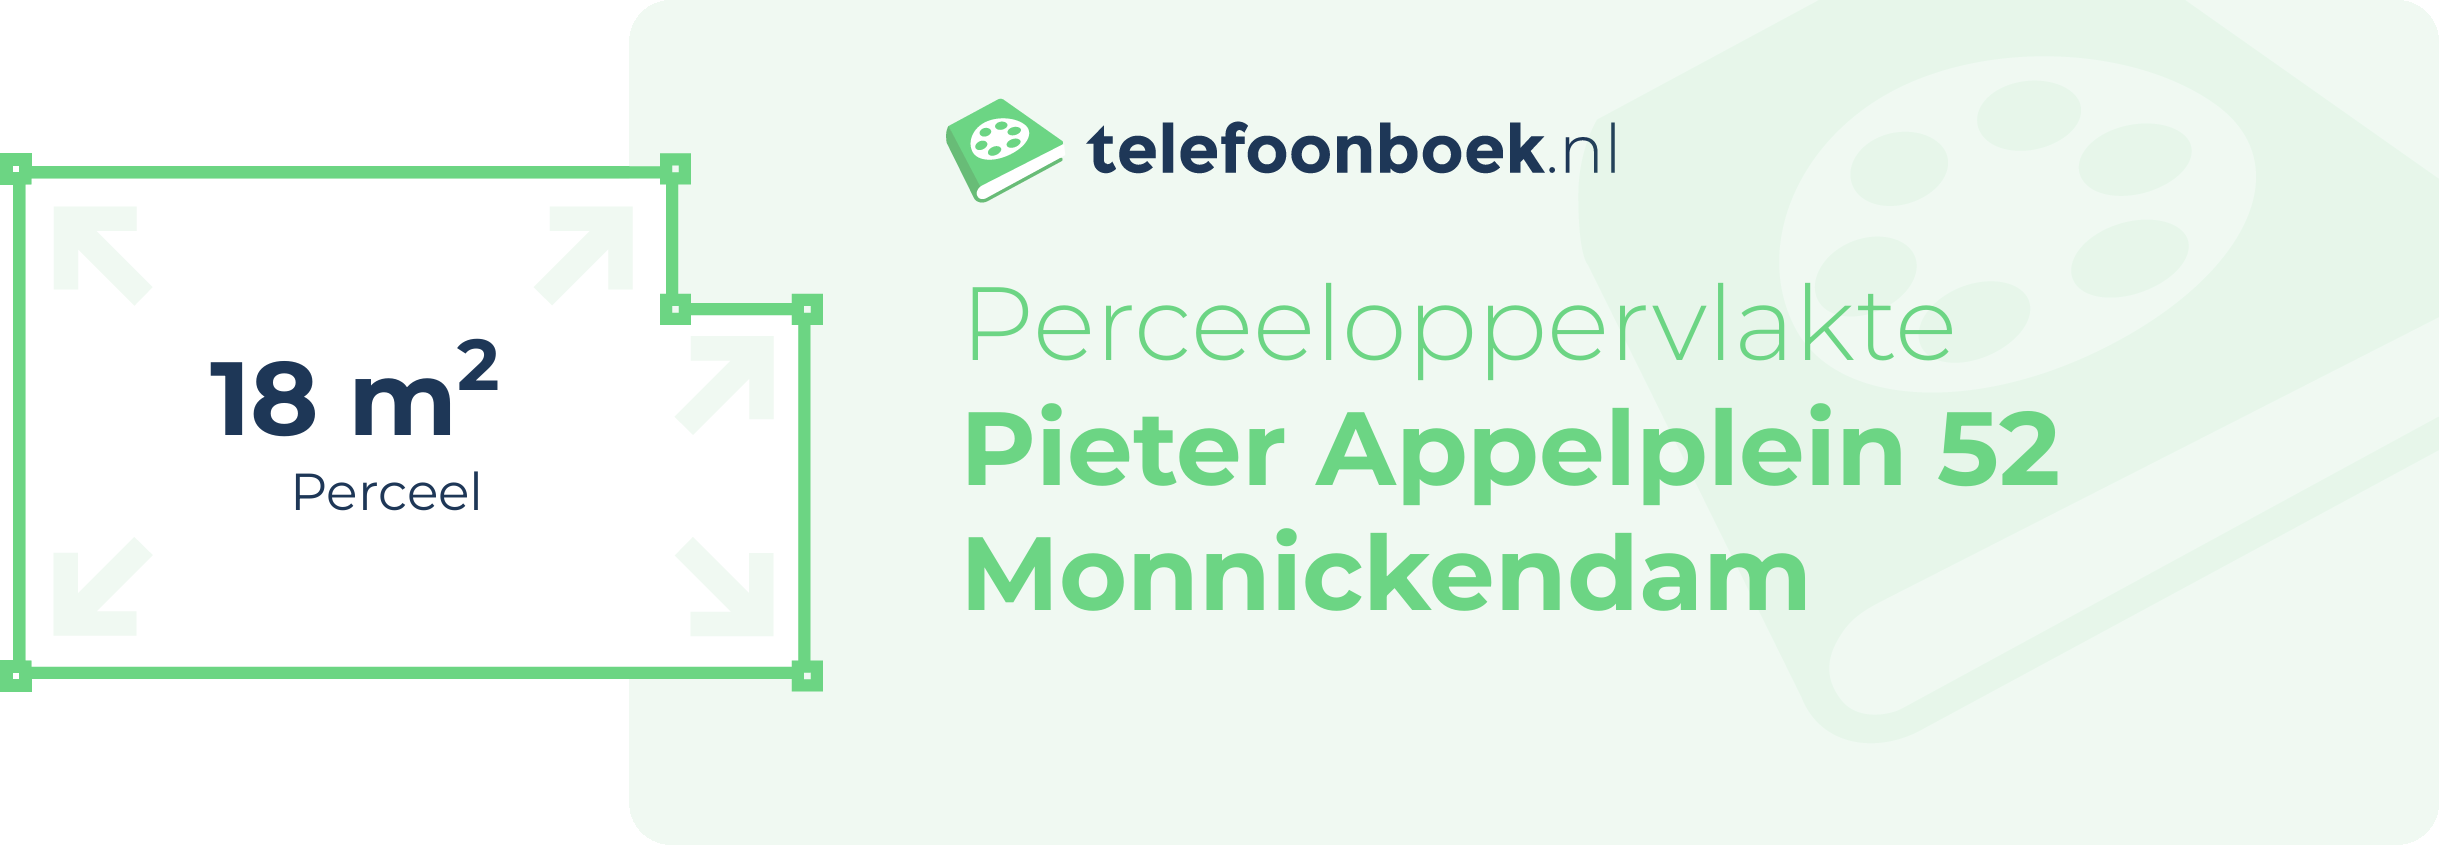 Perceeloppervlakte Pieter Appelplein 52 Monnickendam